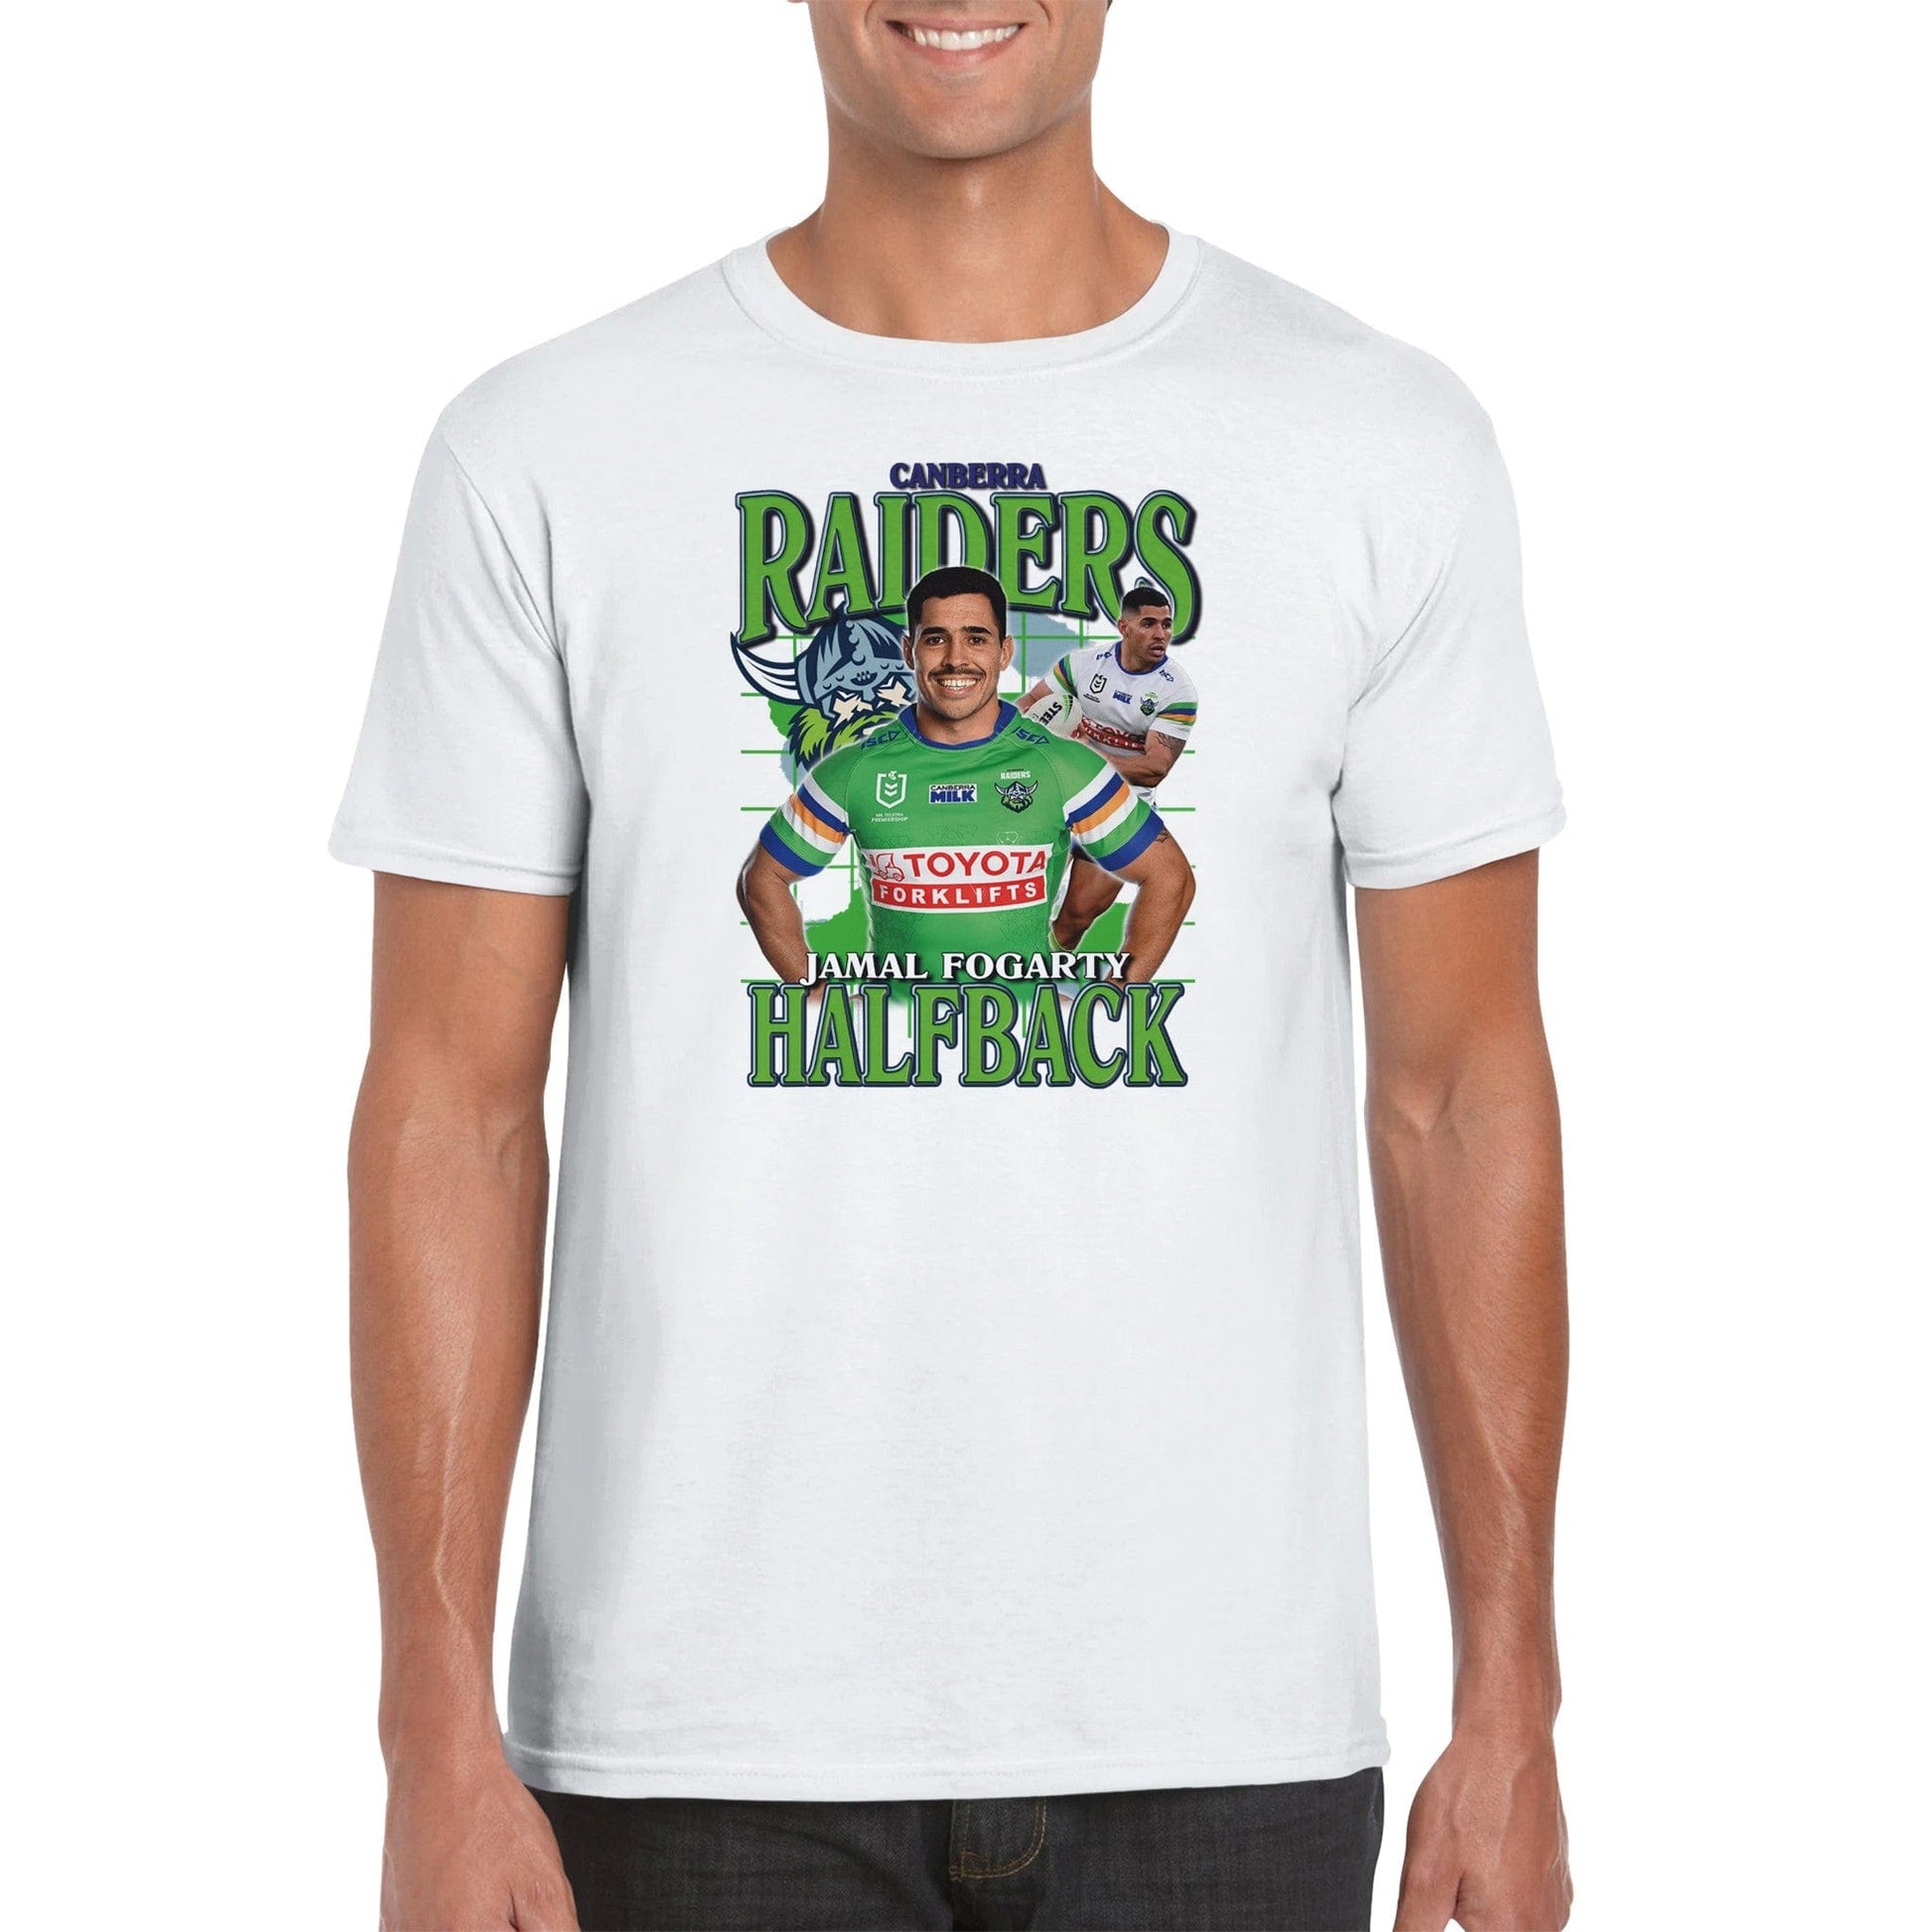 Jamal Fogarty T-shirt Australia Online Color